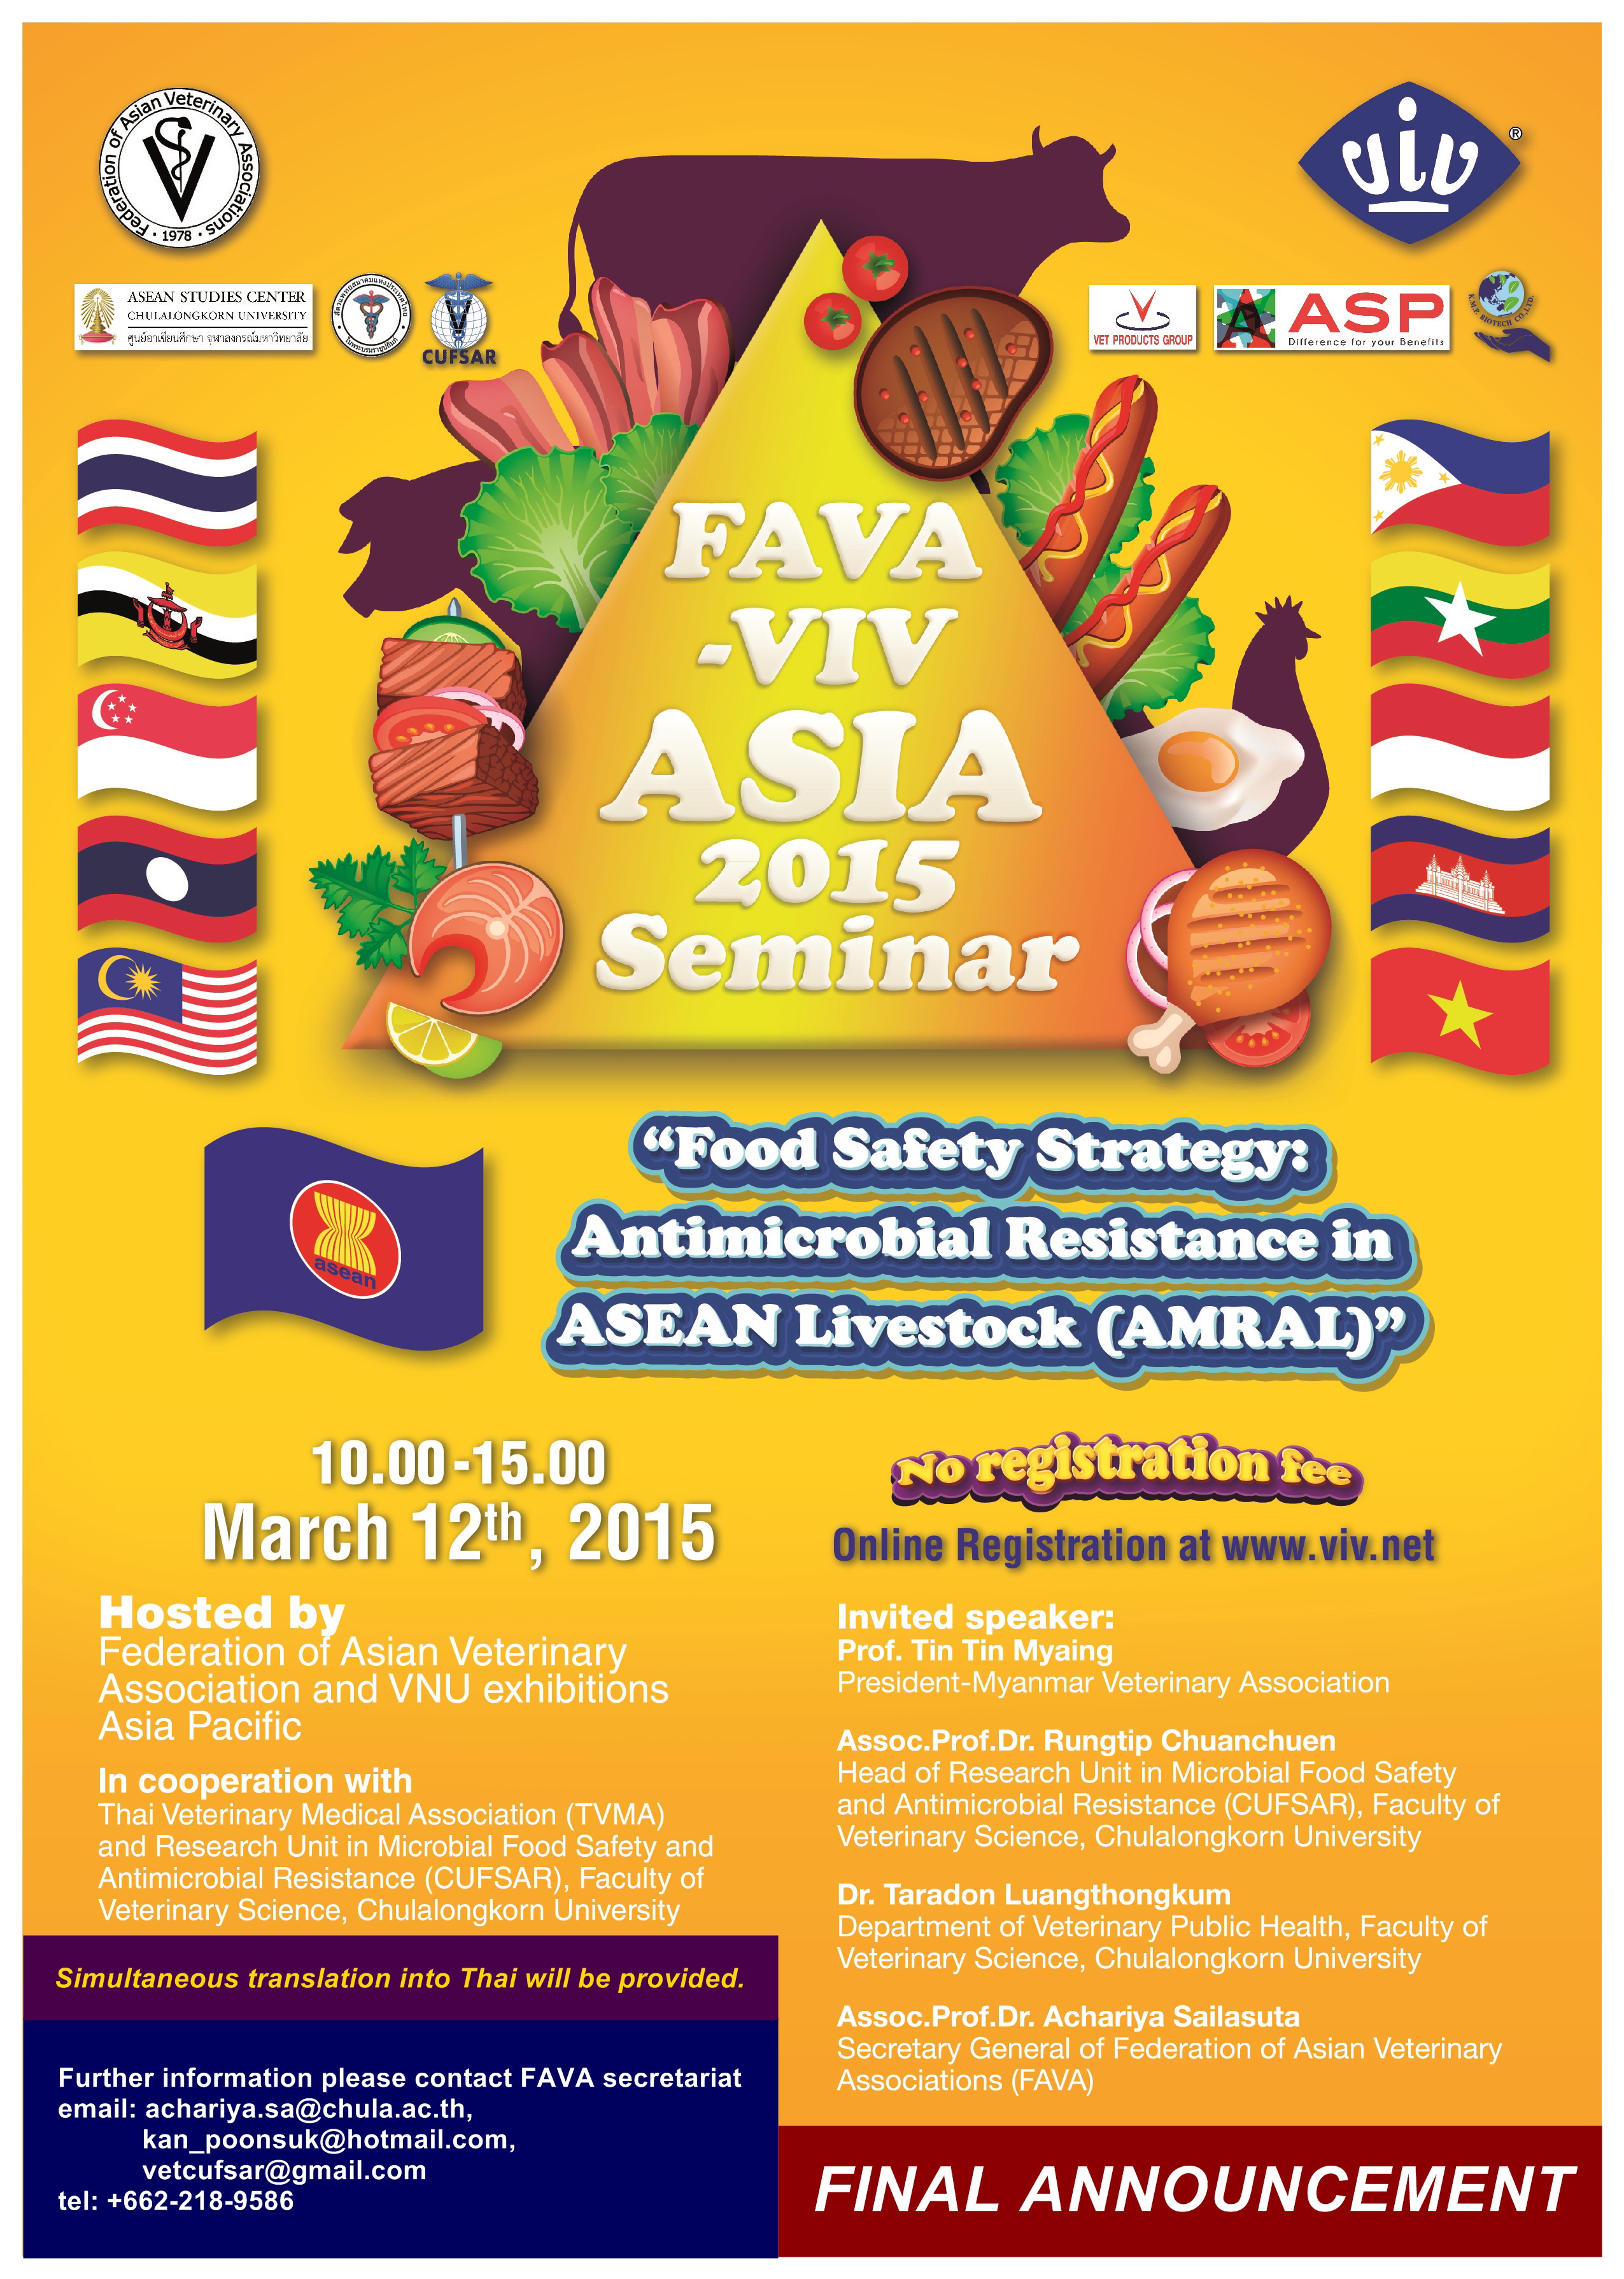 Fava-VIV-Asia-Seminar-2015